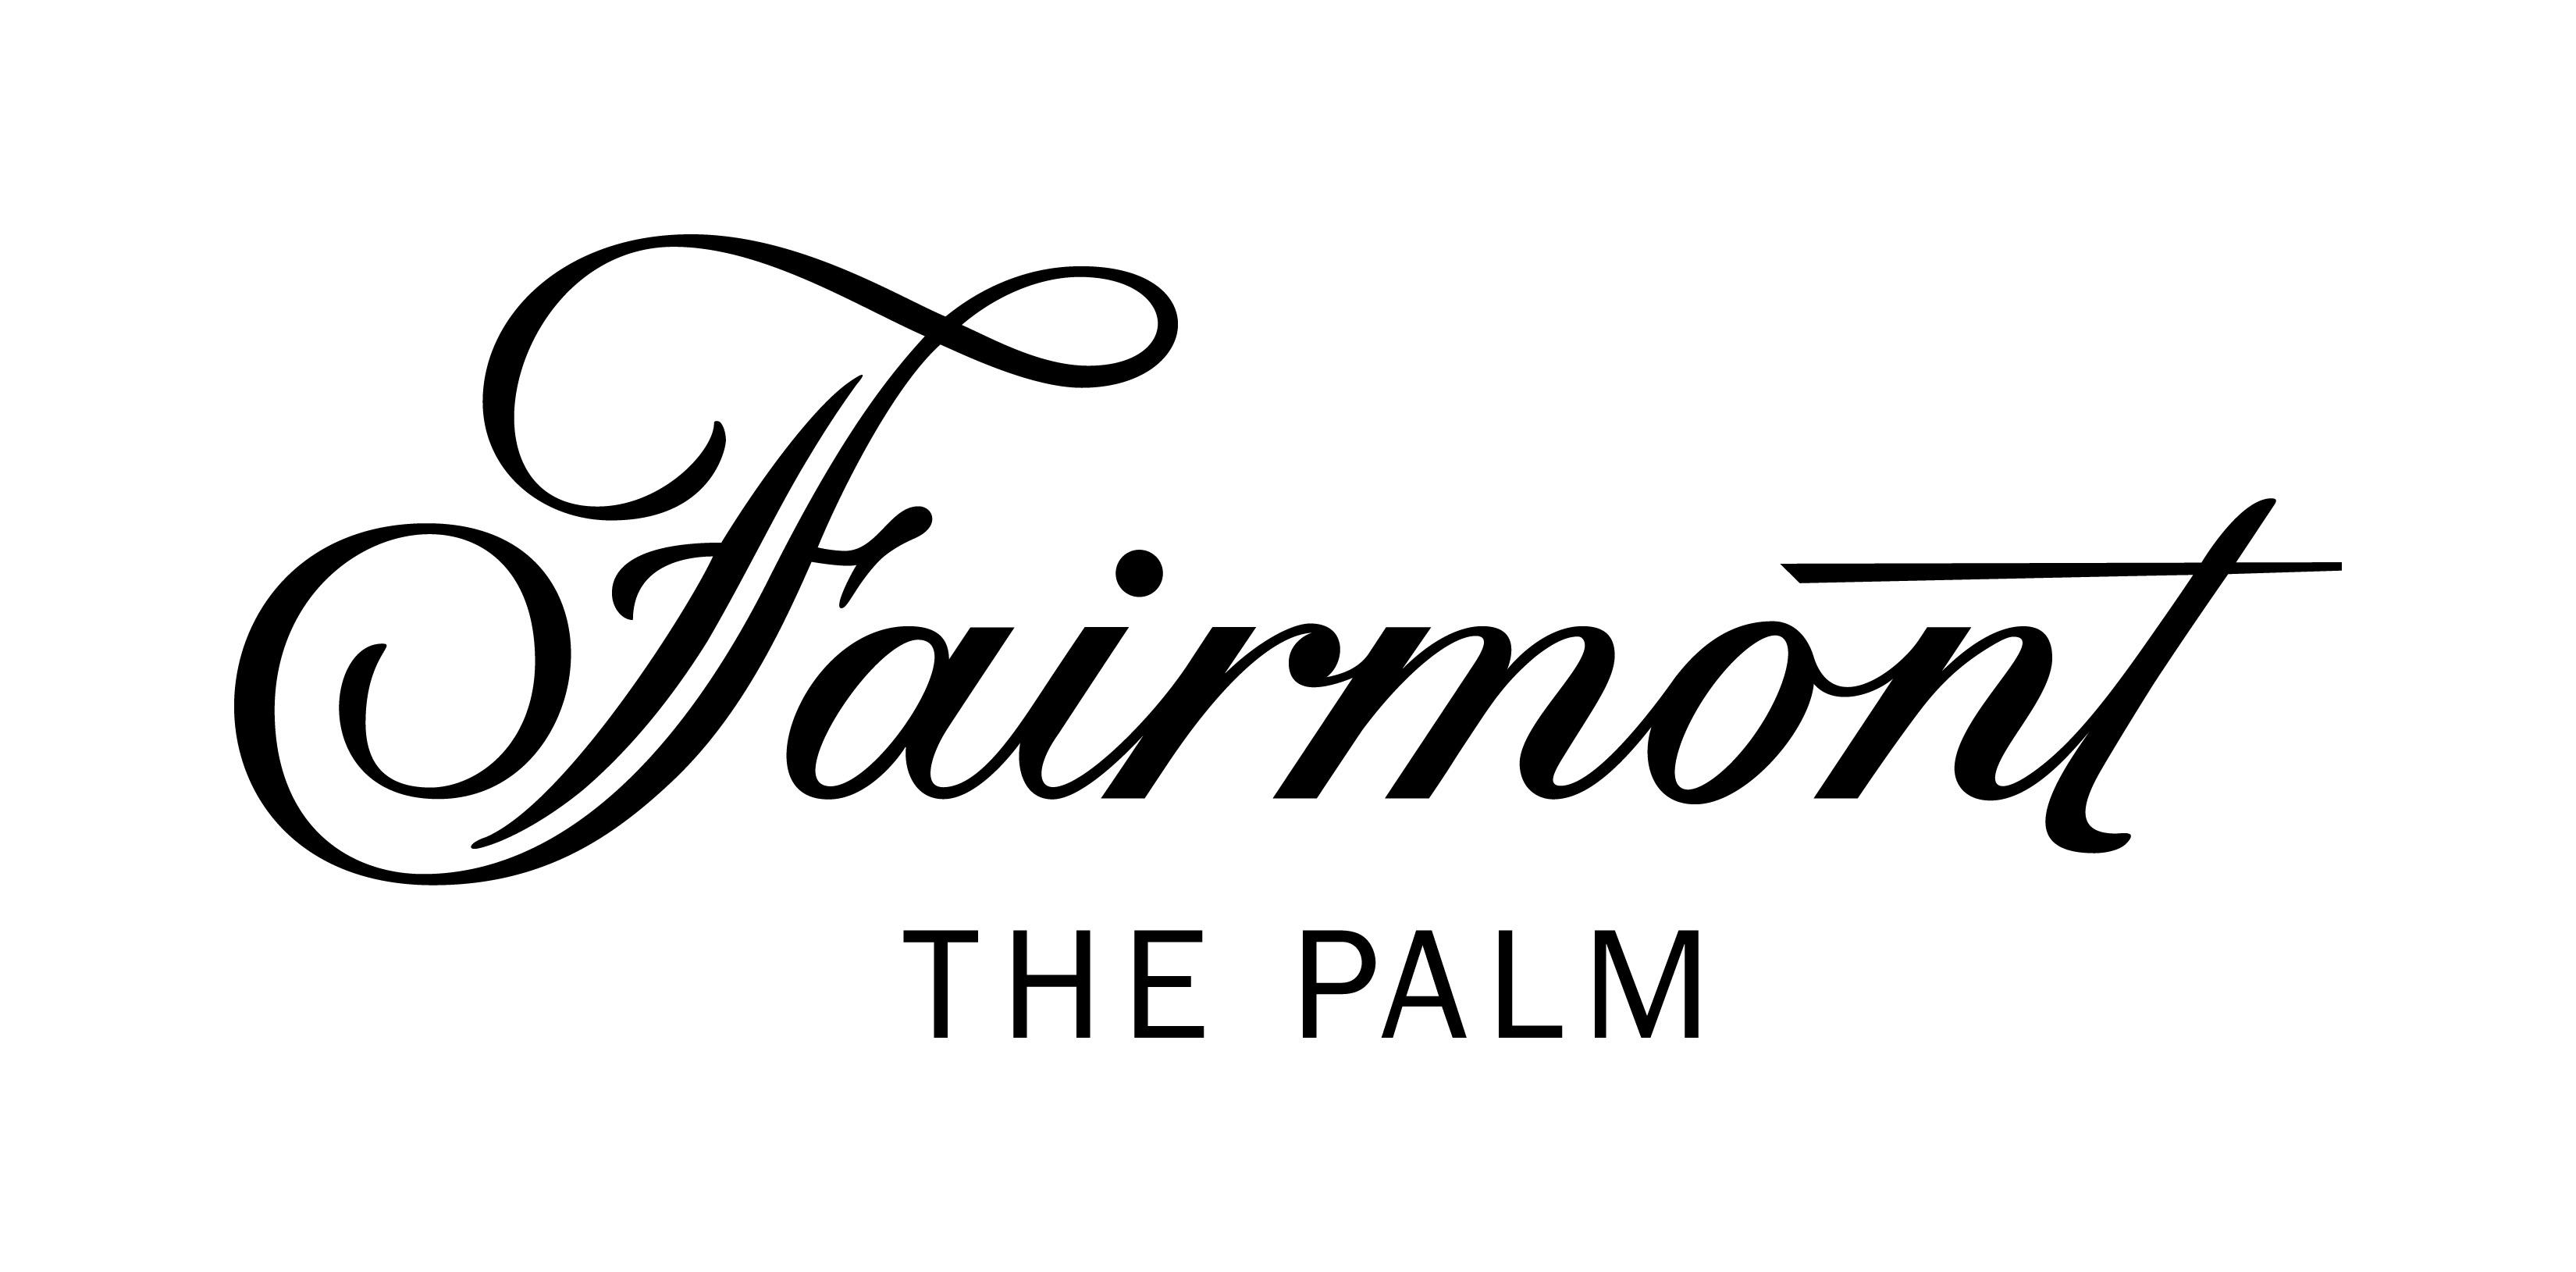 Fairmont Palm Logo - Fairmont The Palm logo in black 2015 The Closet